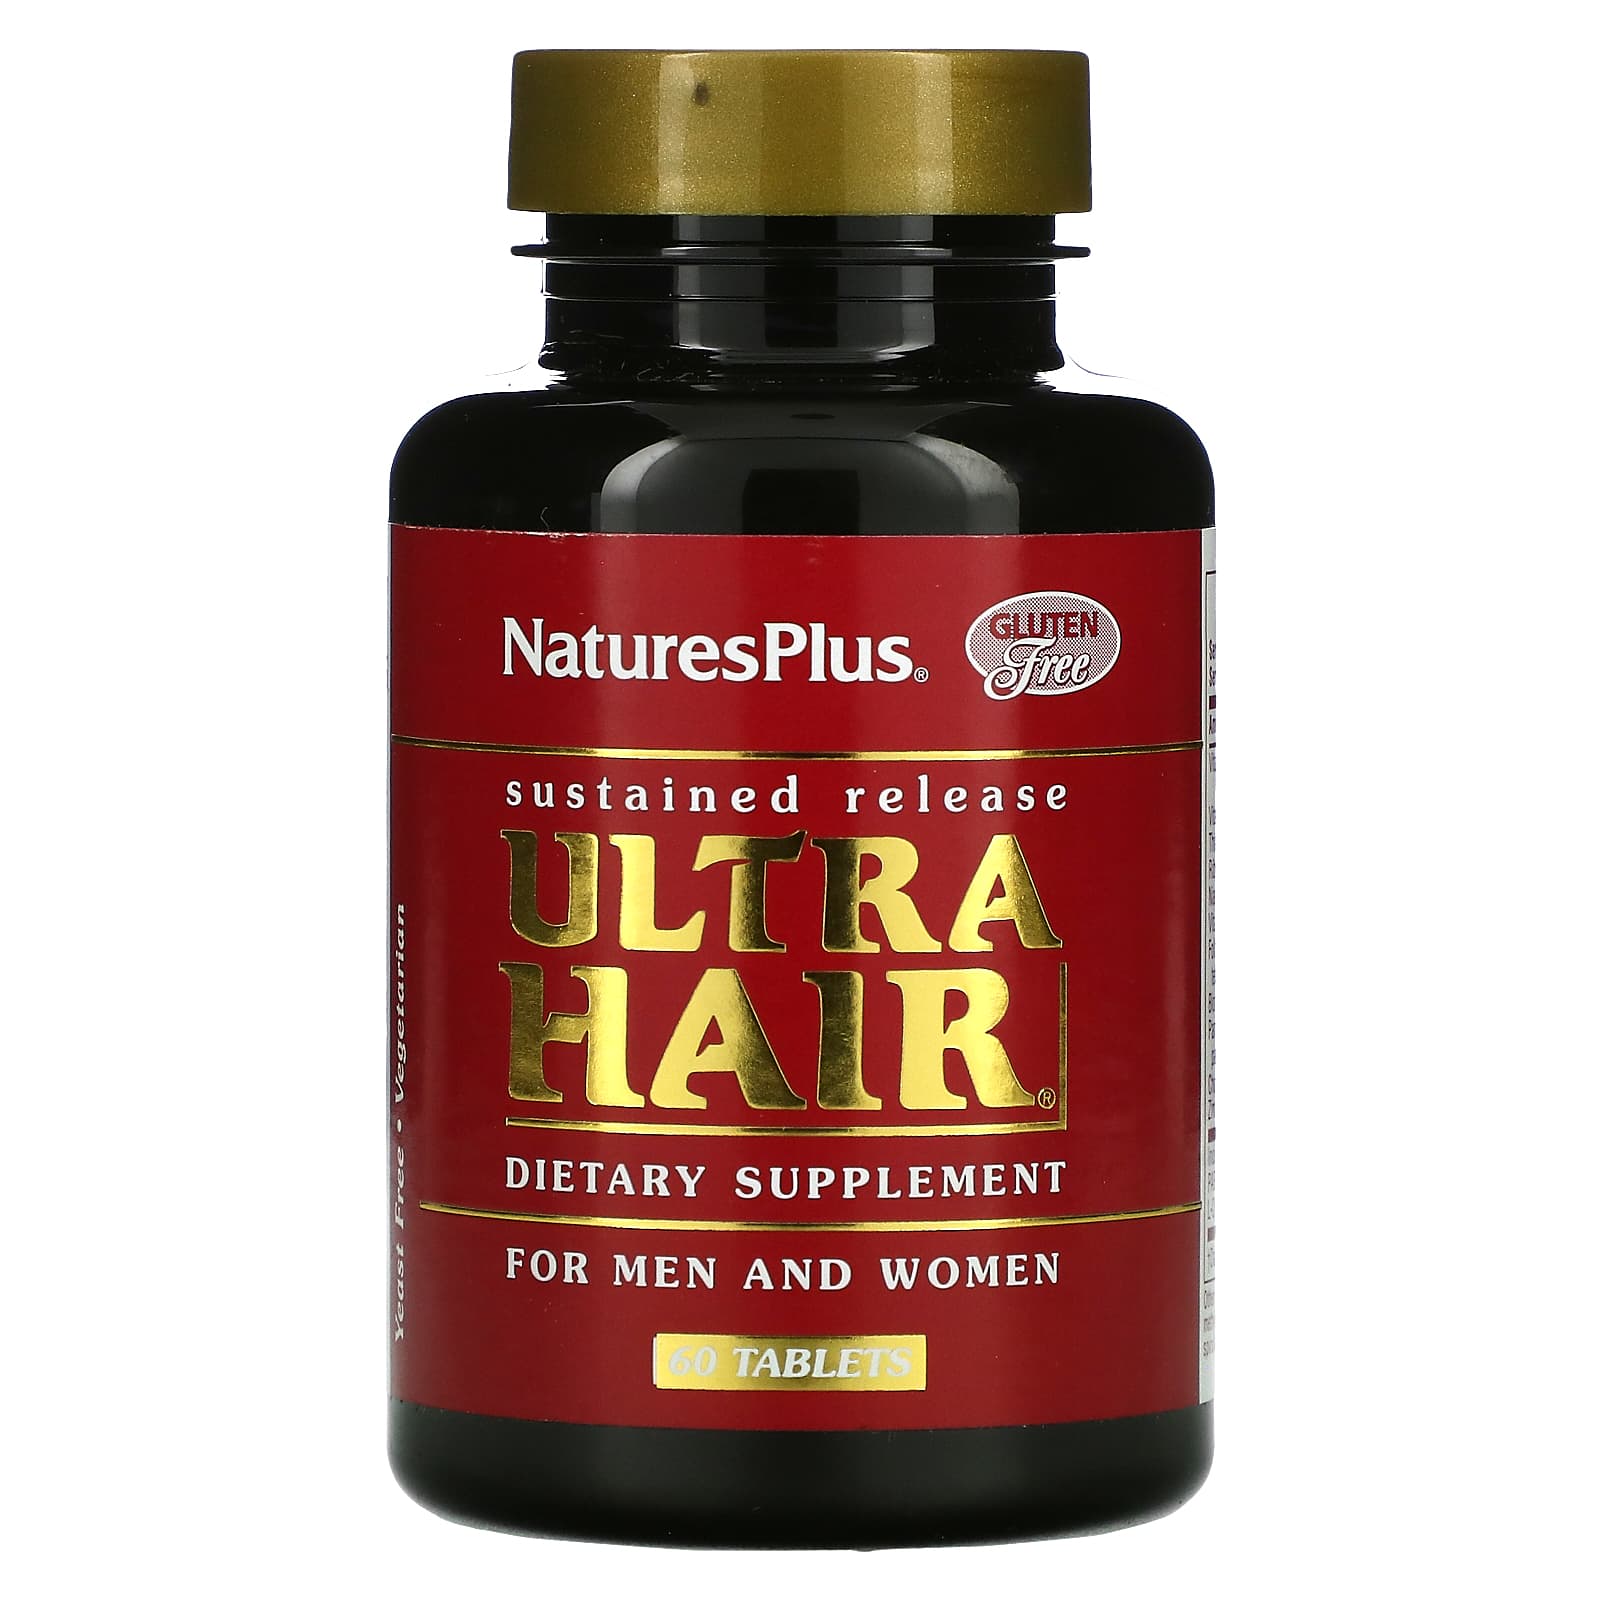 Витамины NaturesPlus для мужчин и женщин, 60 таблеток naturesplus витамин е 400 ме 60 таблеток для сердца иммунитета кожи волос для мужчин и женщин